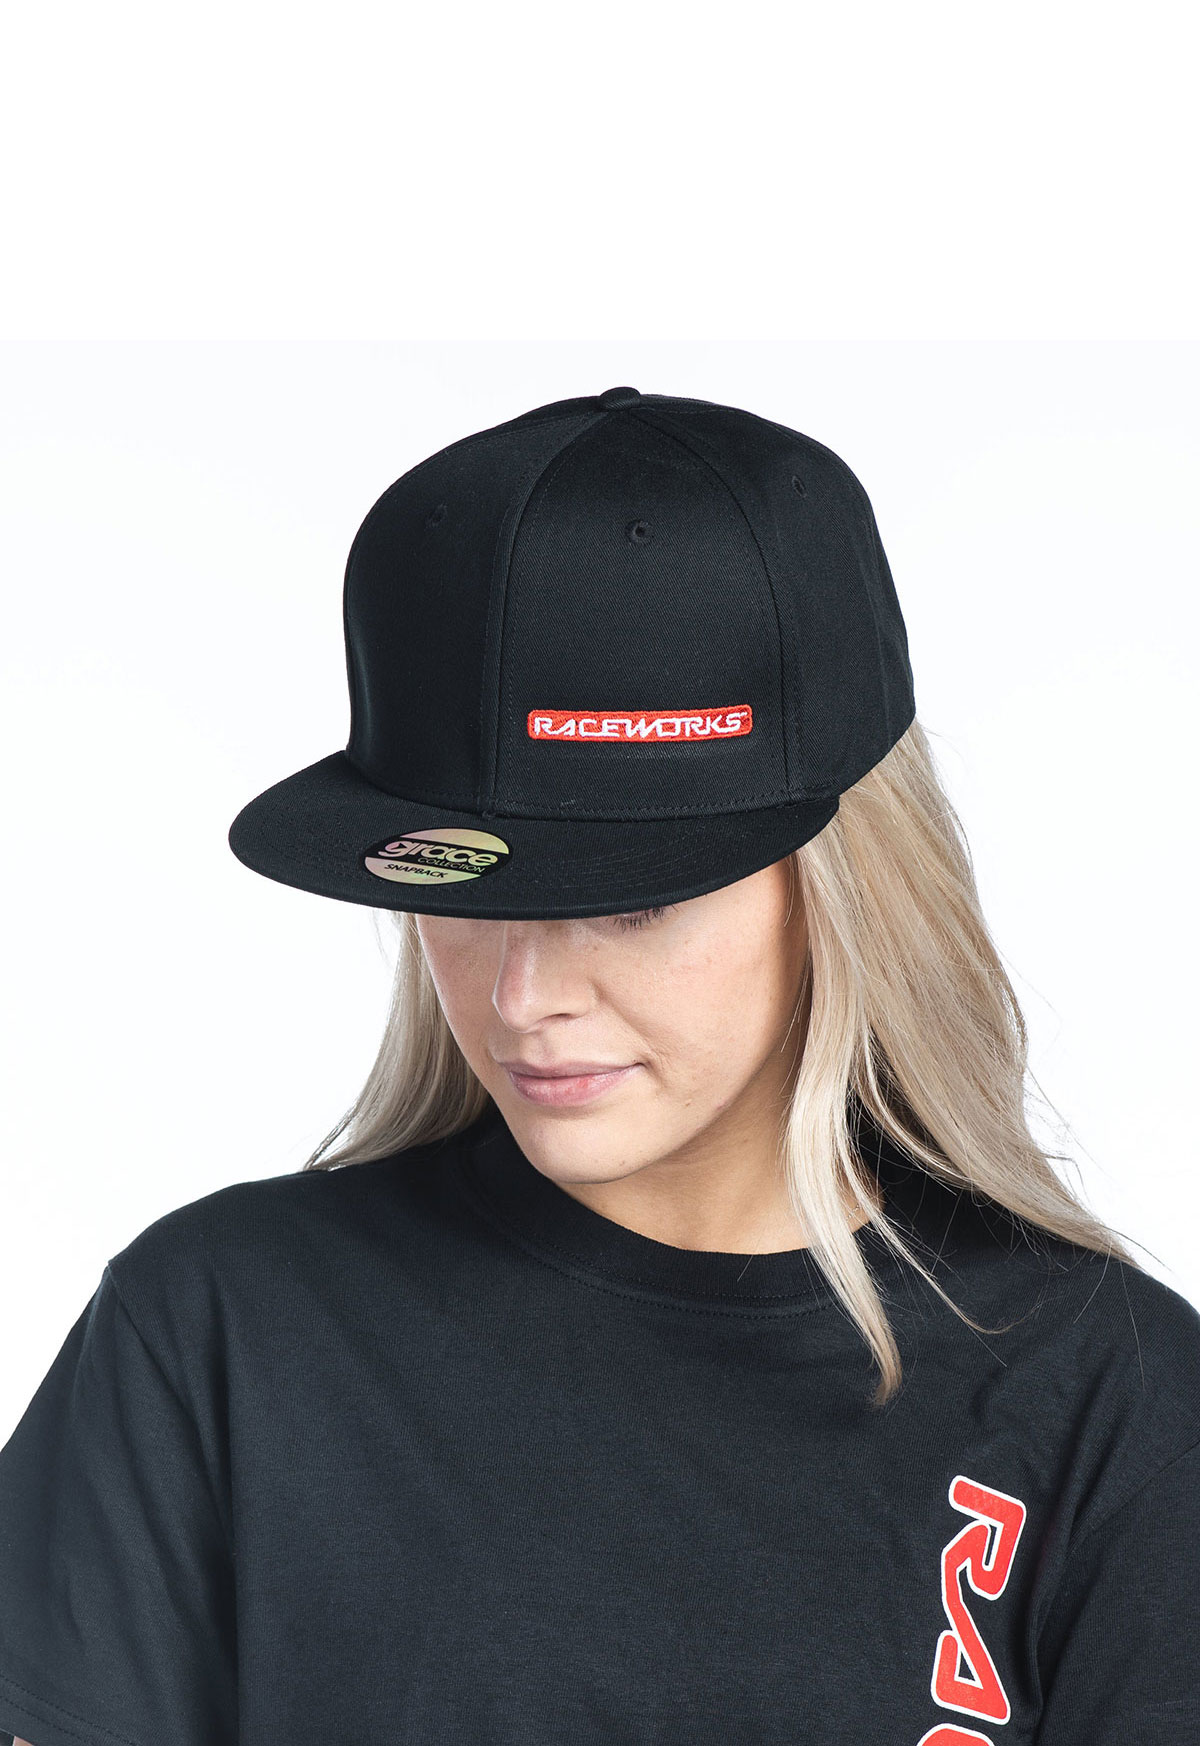 11official raceworks merchandise flat peak hat